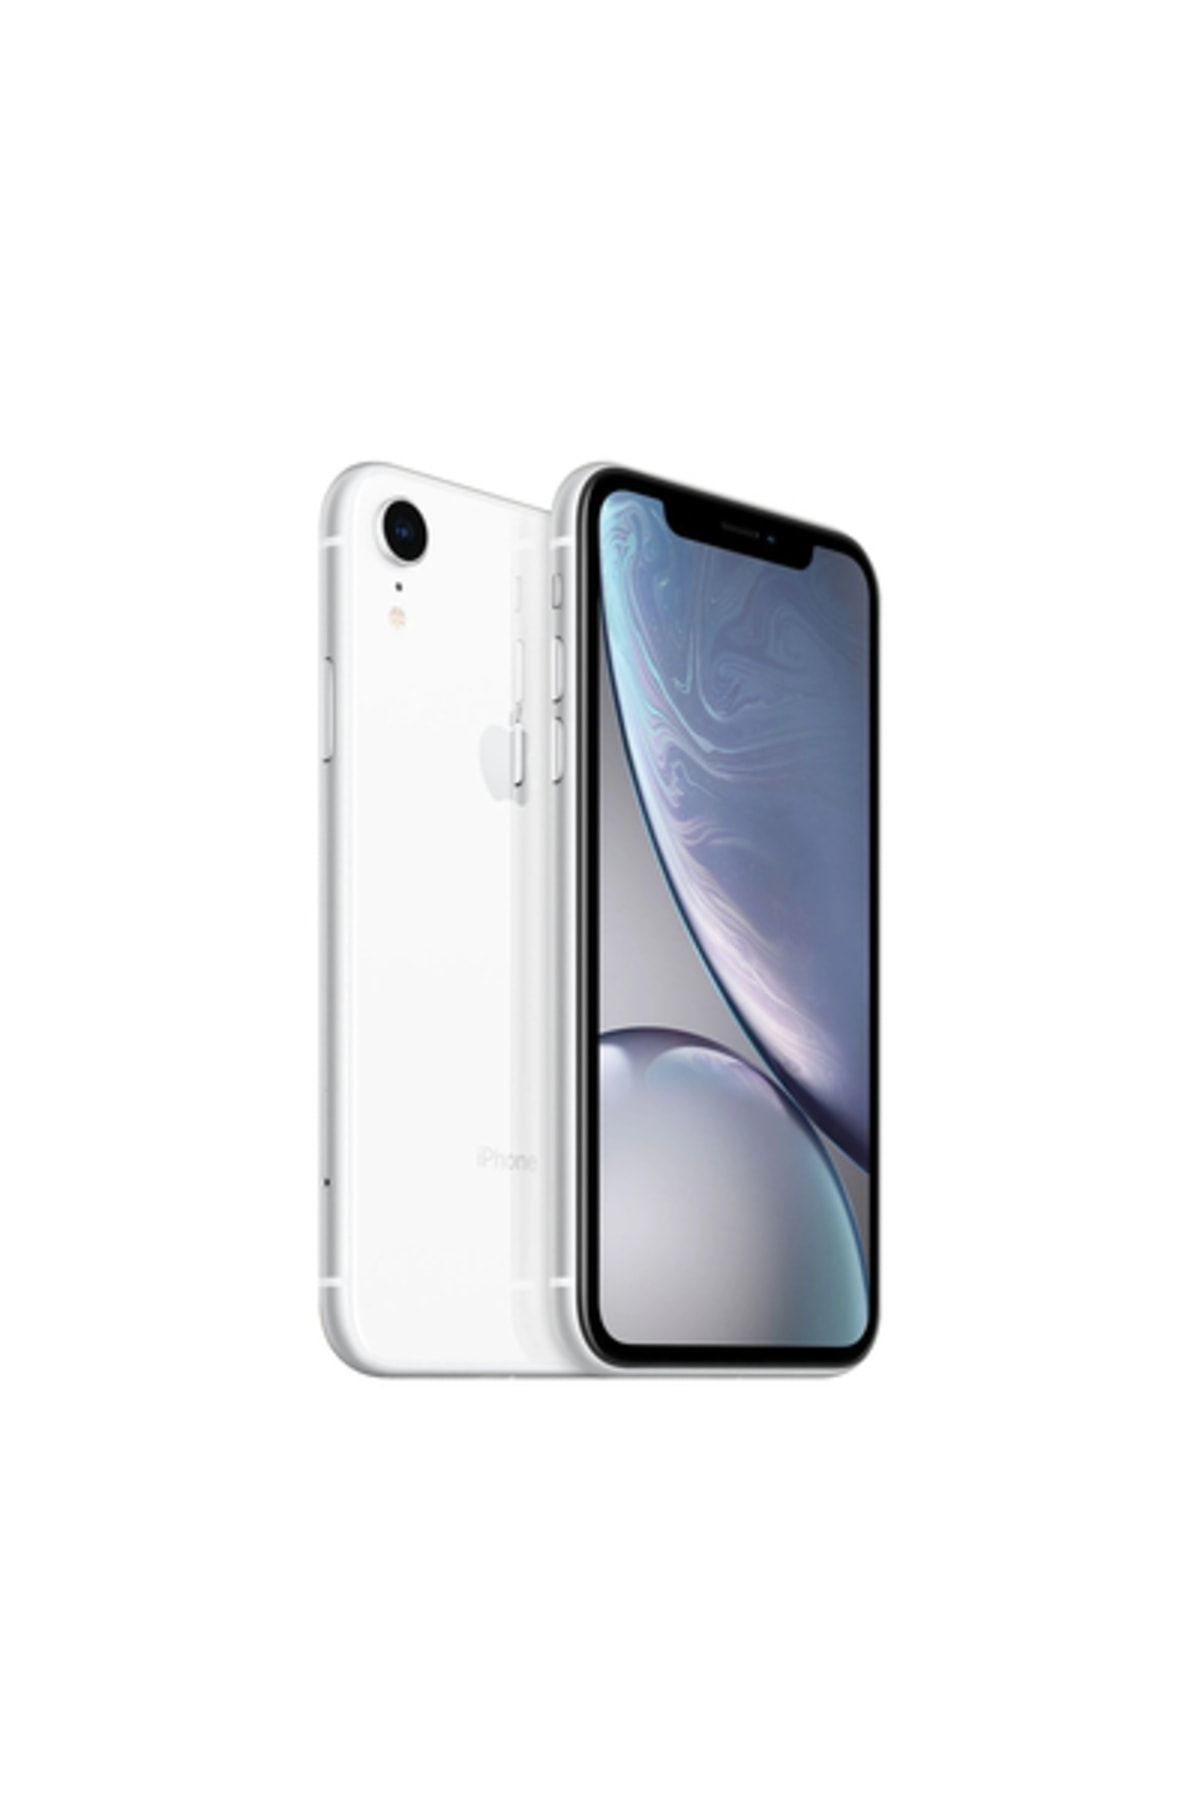 Apple Yenilenmiş iPhone Xr 64 GB Beyaz Cep Telefonu (12 Ay Garantili) - A Kalite